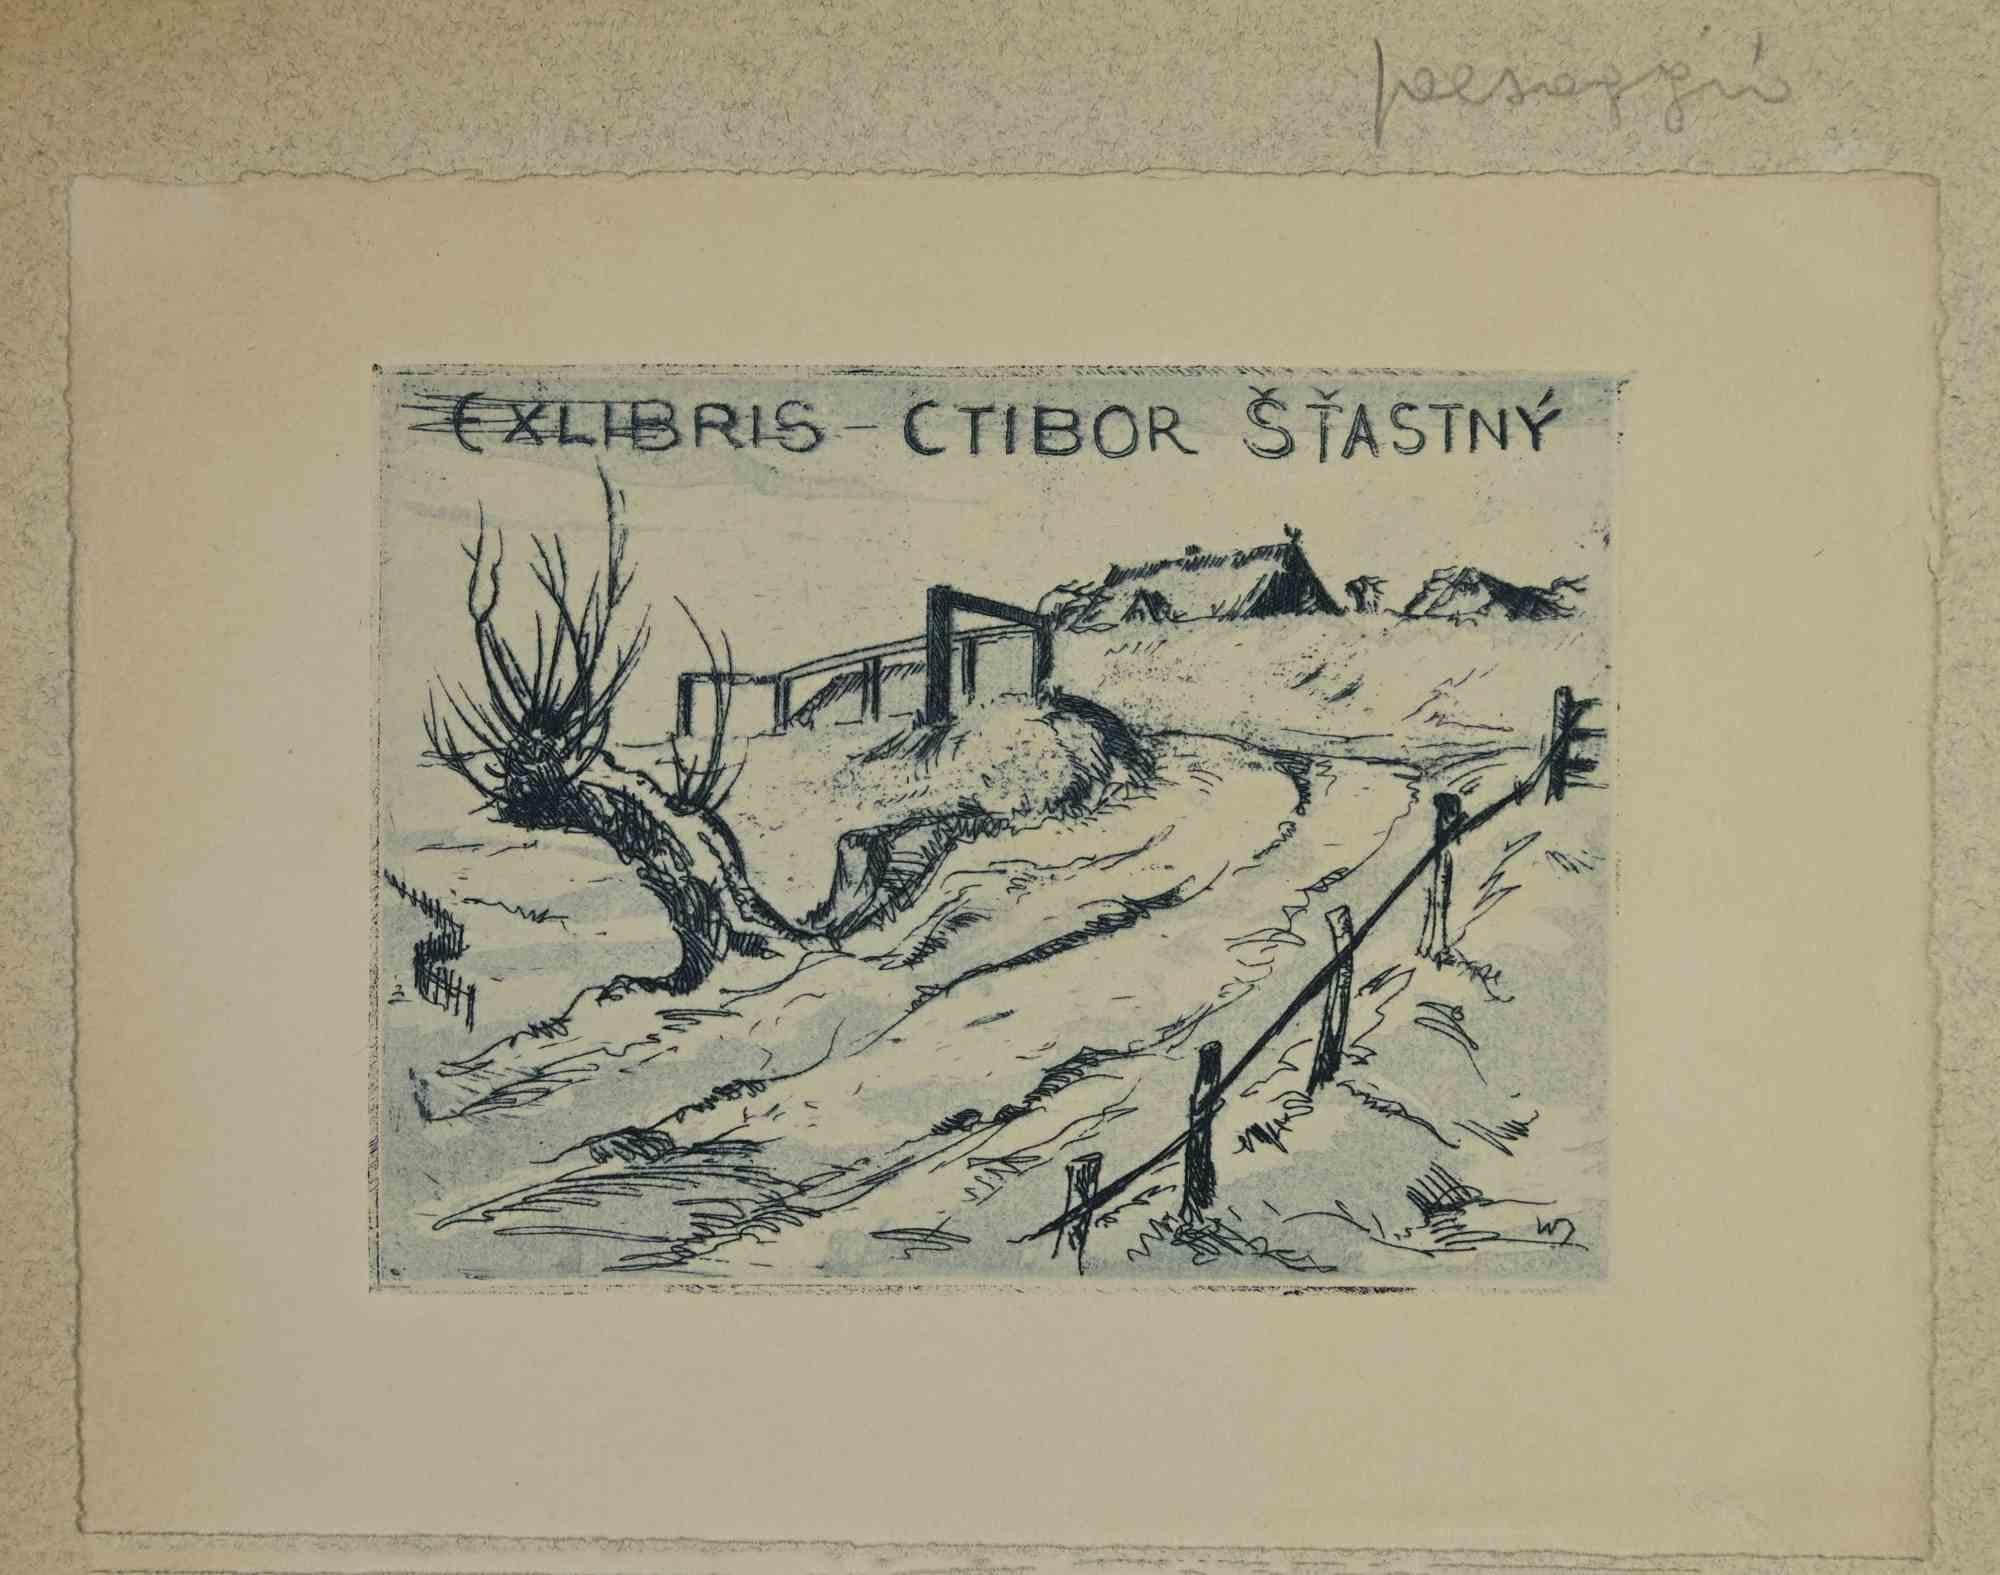 Ex-Libris - Ctibor Štastny - Etching - Early-20th Century